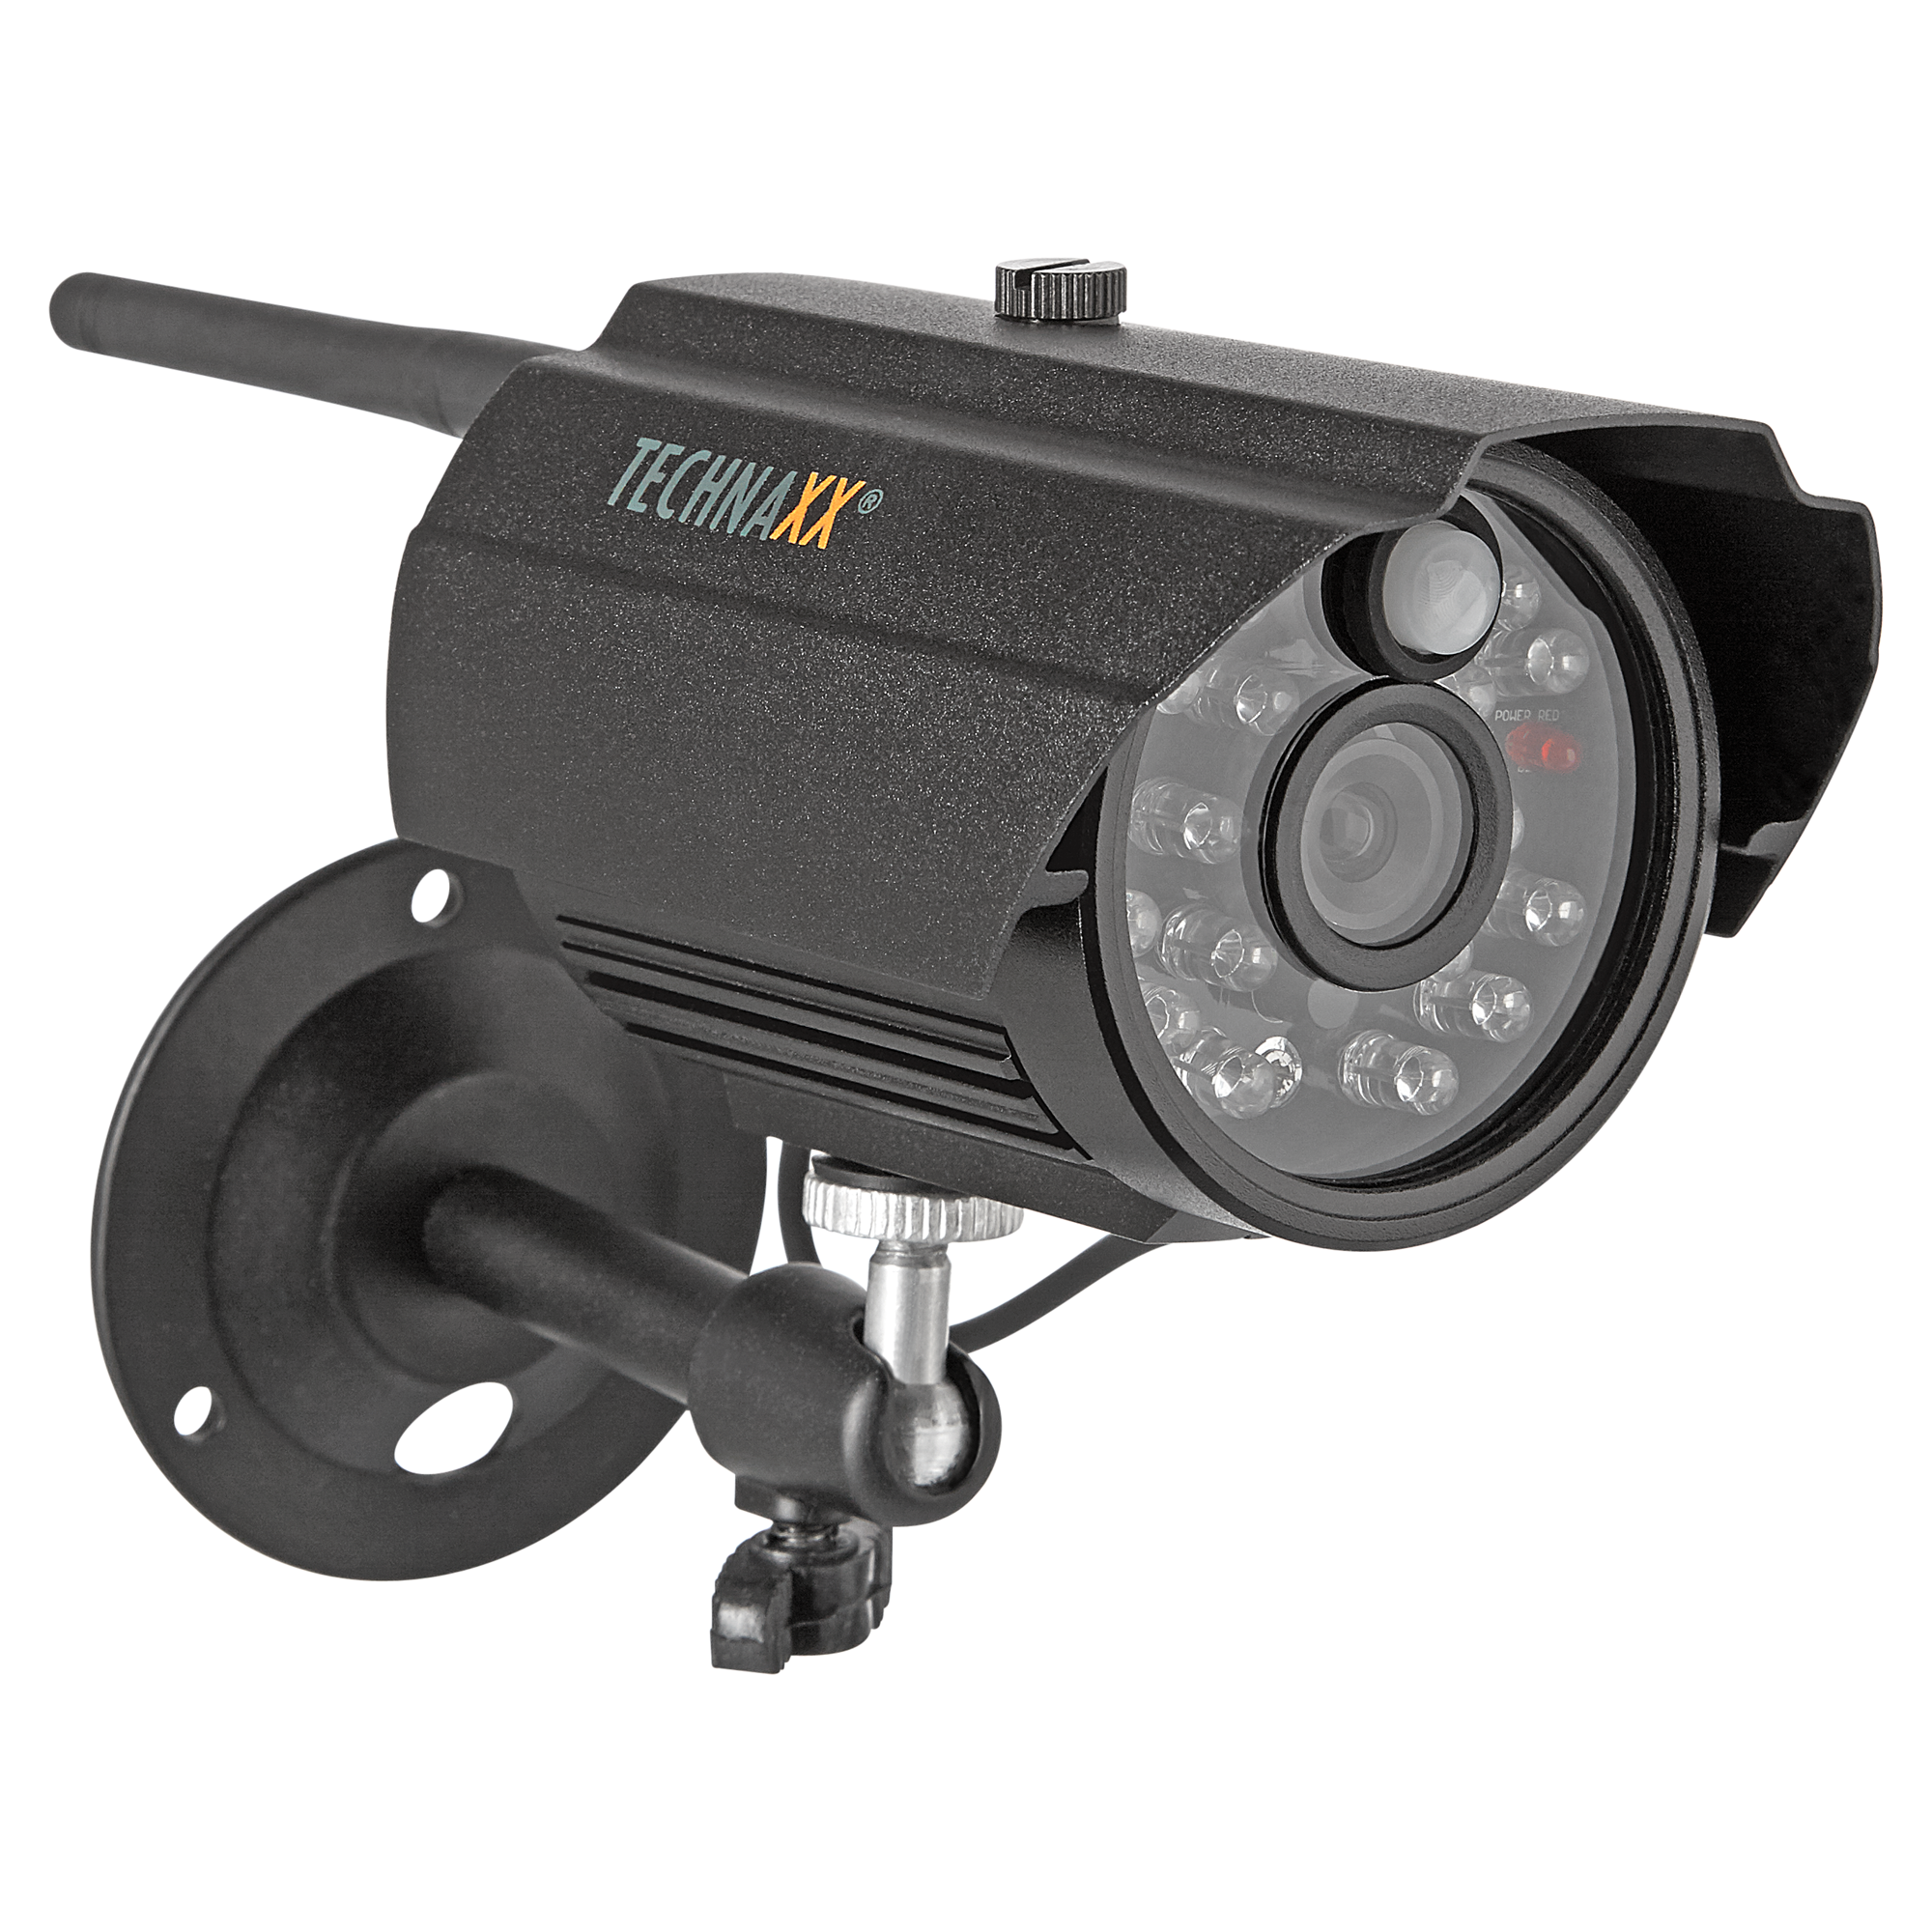 Überwachungskamera TX-28 5 V + product picture